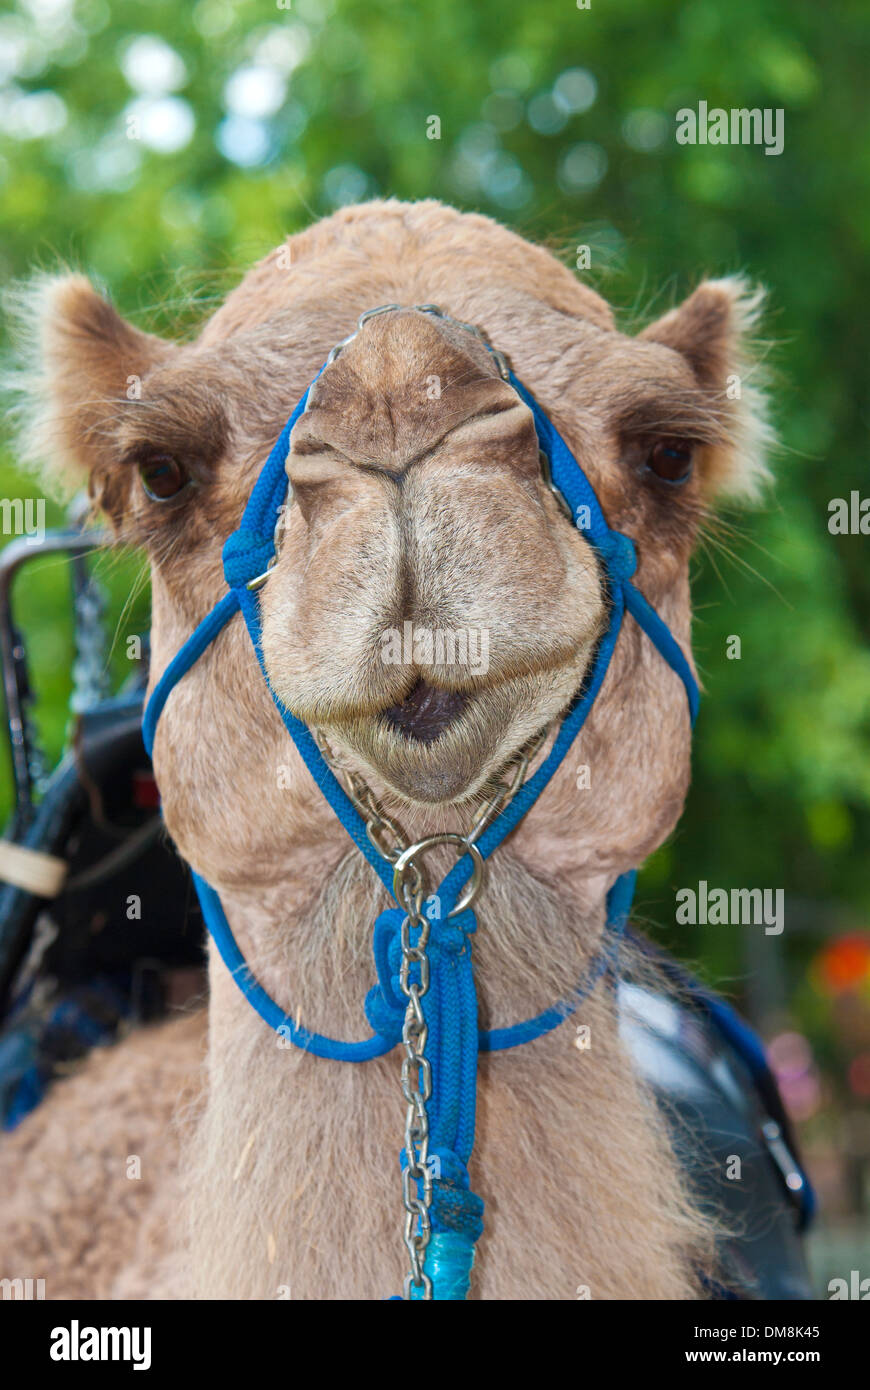 Camel, Animal Portrait, Head, Front view Stock Photo